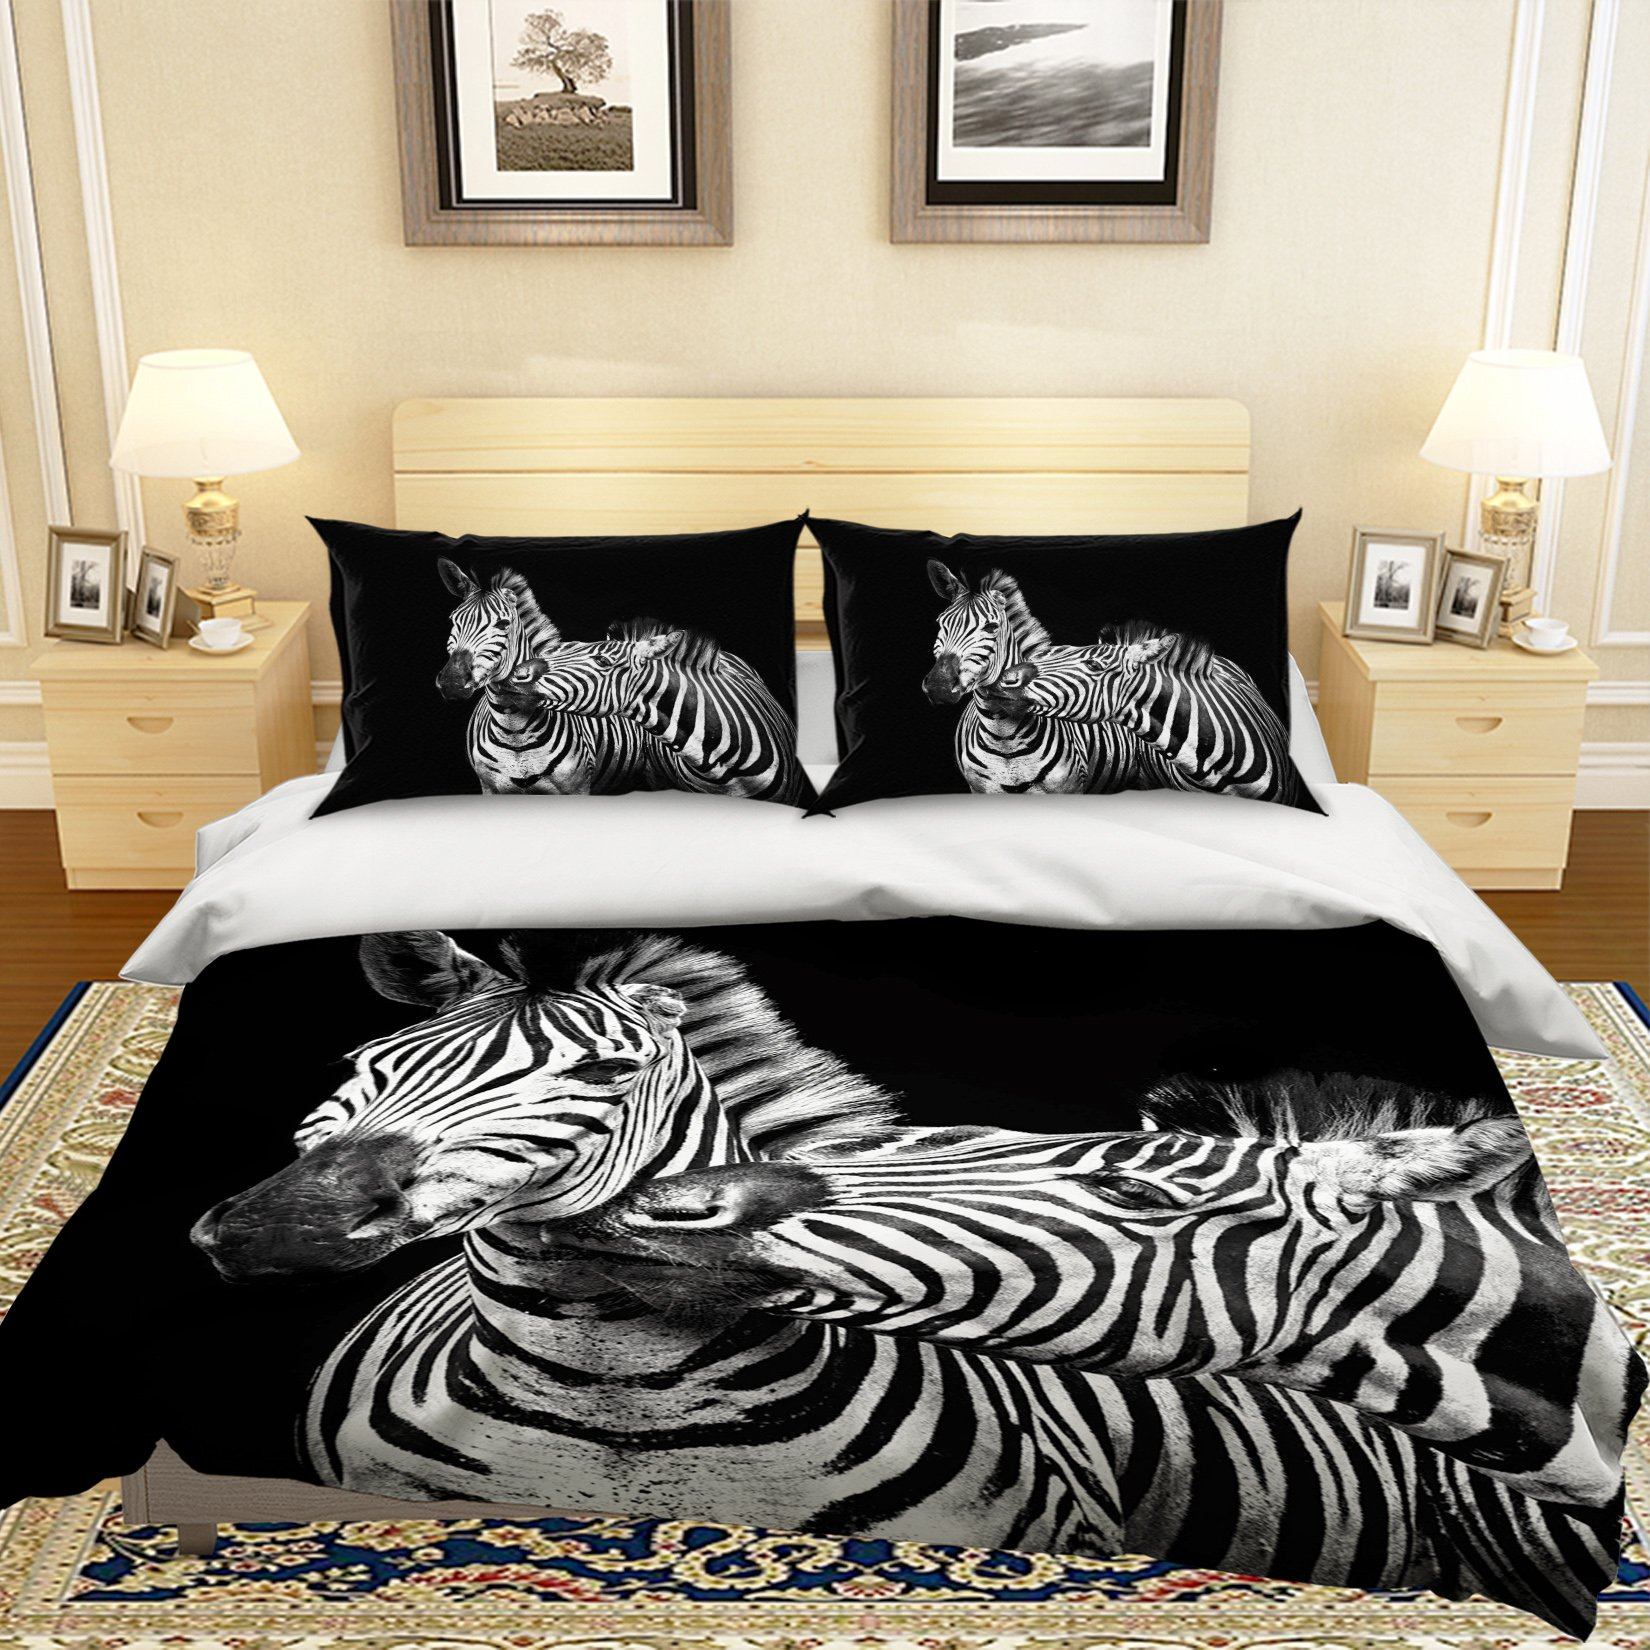 3D Zebra 2016 Bed Pillowcases Quilt Quiet Covers AJ Creativity Home 